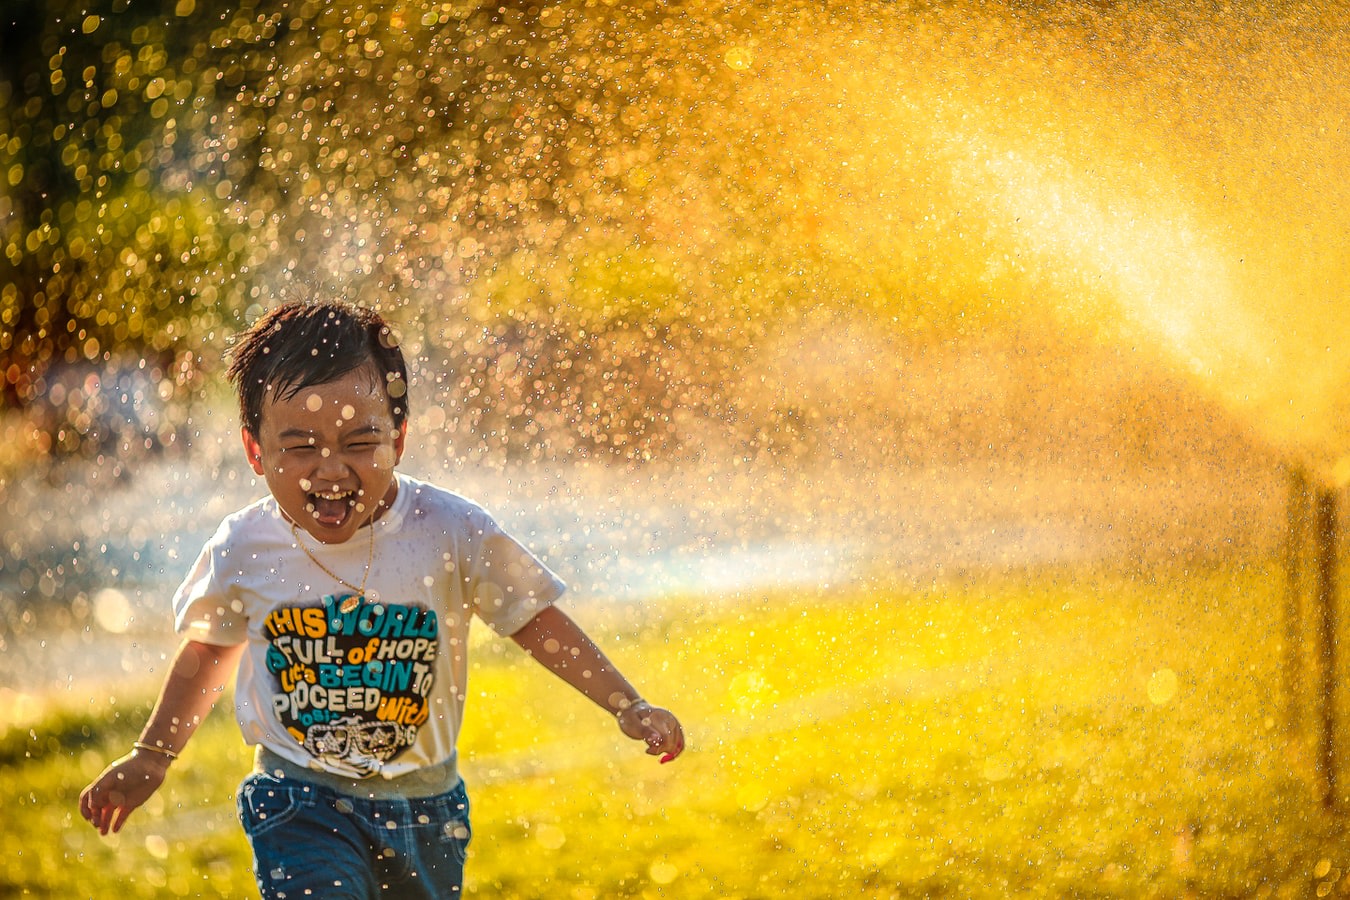 Child running in a water sprinkler